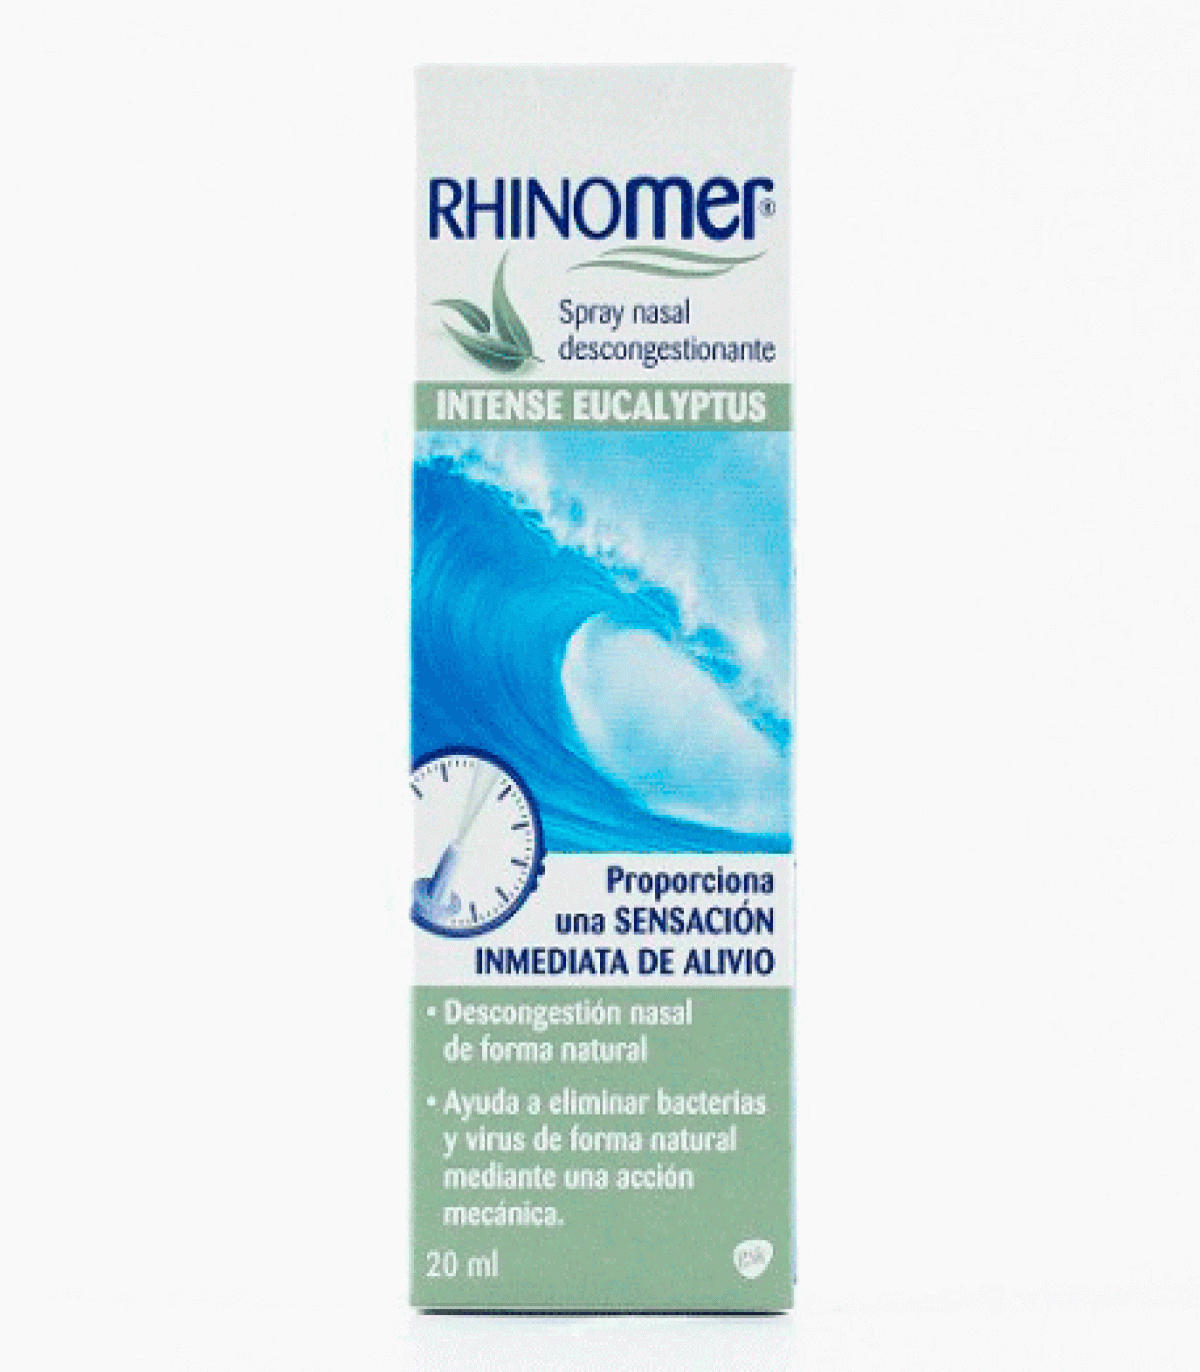 Rhinomer Intense Eucaliptus 20ml, PharmacyClub